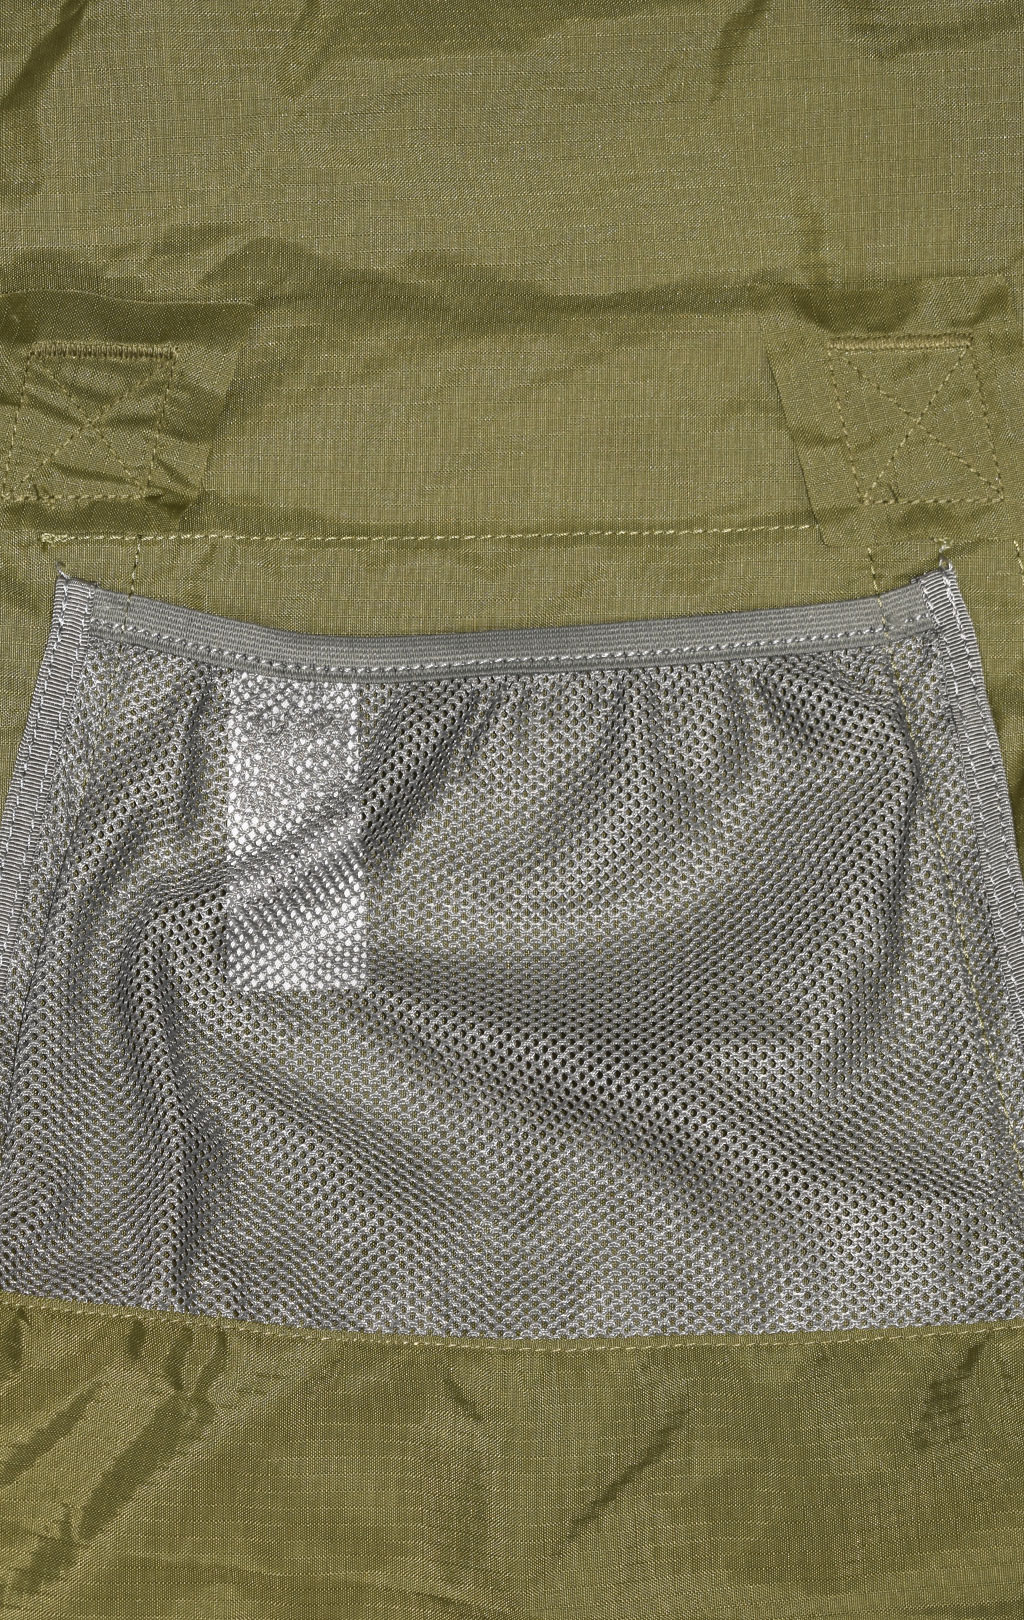 Сумка Pentagon KANON DUFFLE BAG с подсумком olive 06 16102 